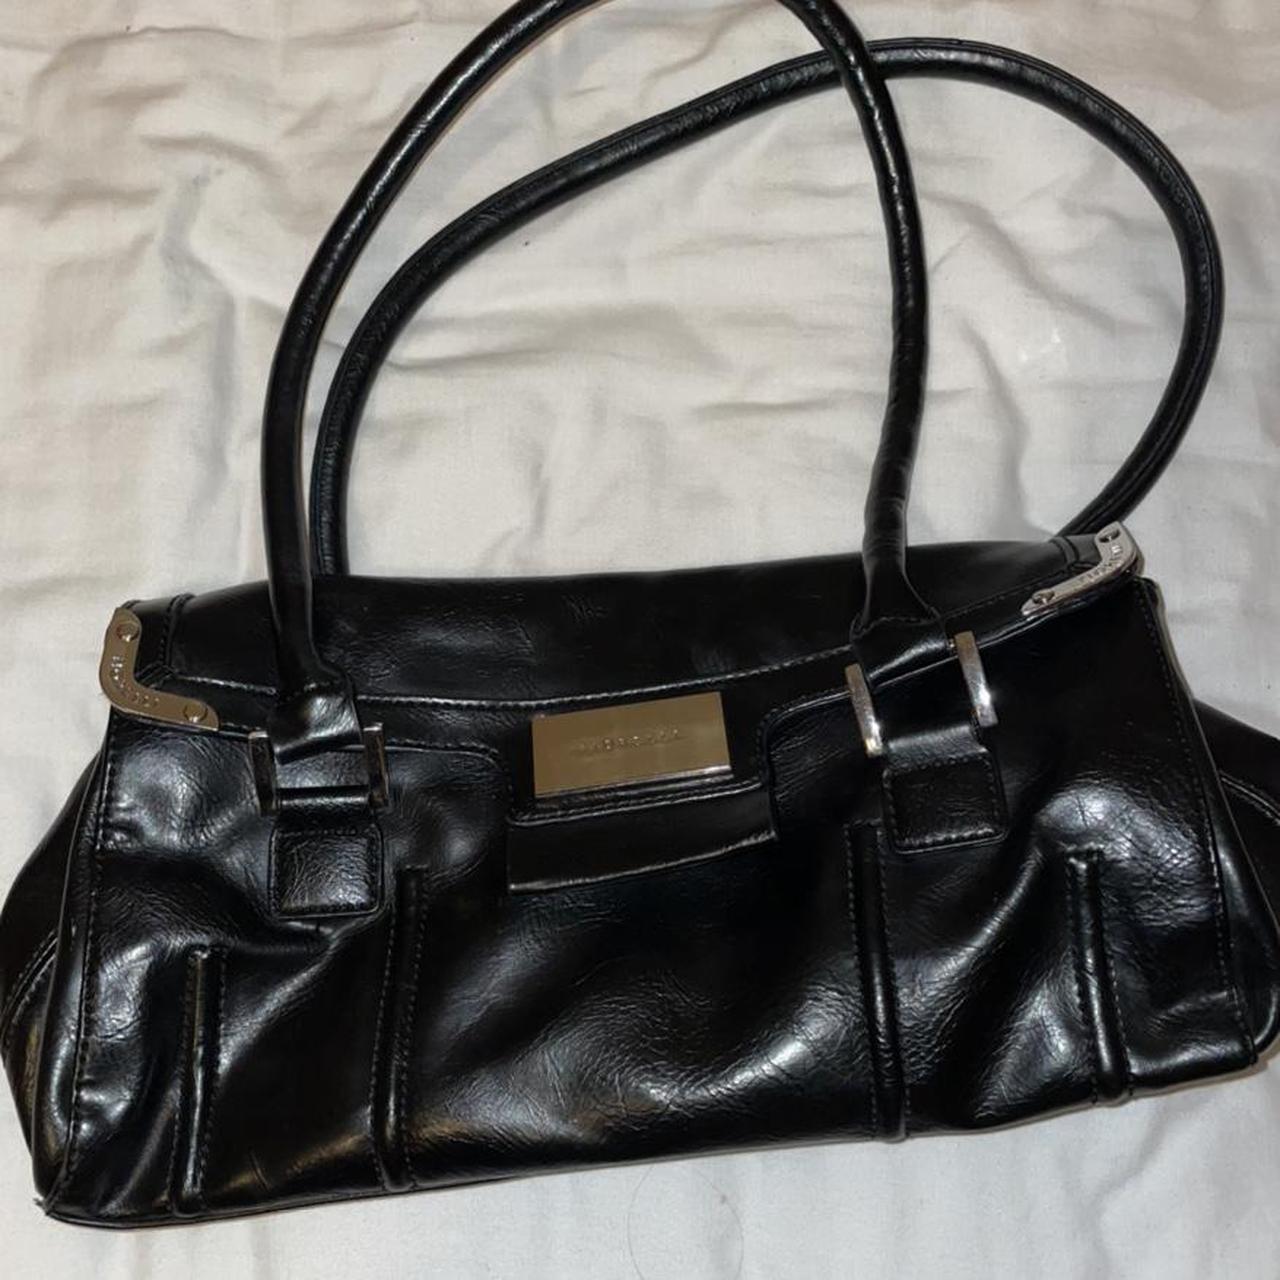 Product Image 1 - Fiorelli genuine leather bag 

Perfect